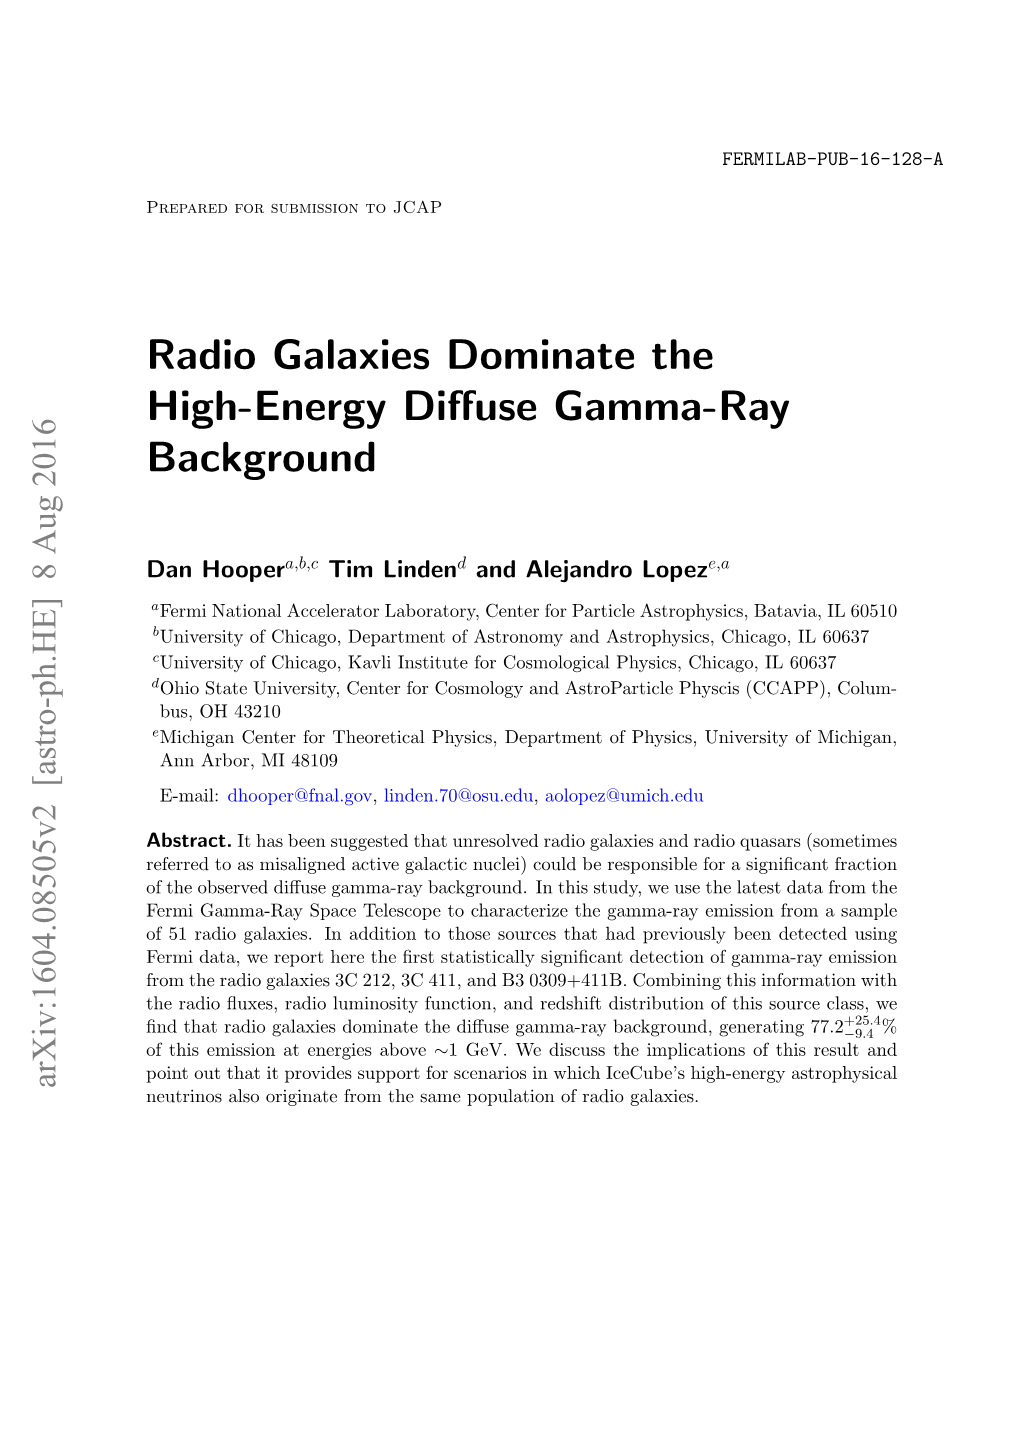 Radio Galaxies Dominate the High-Energy Diffuse Gamma-Ray